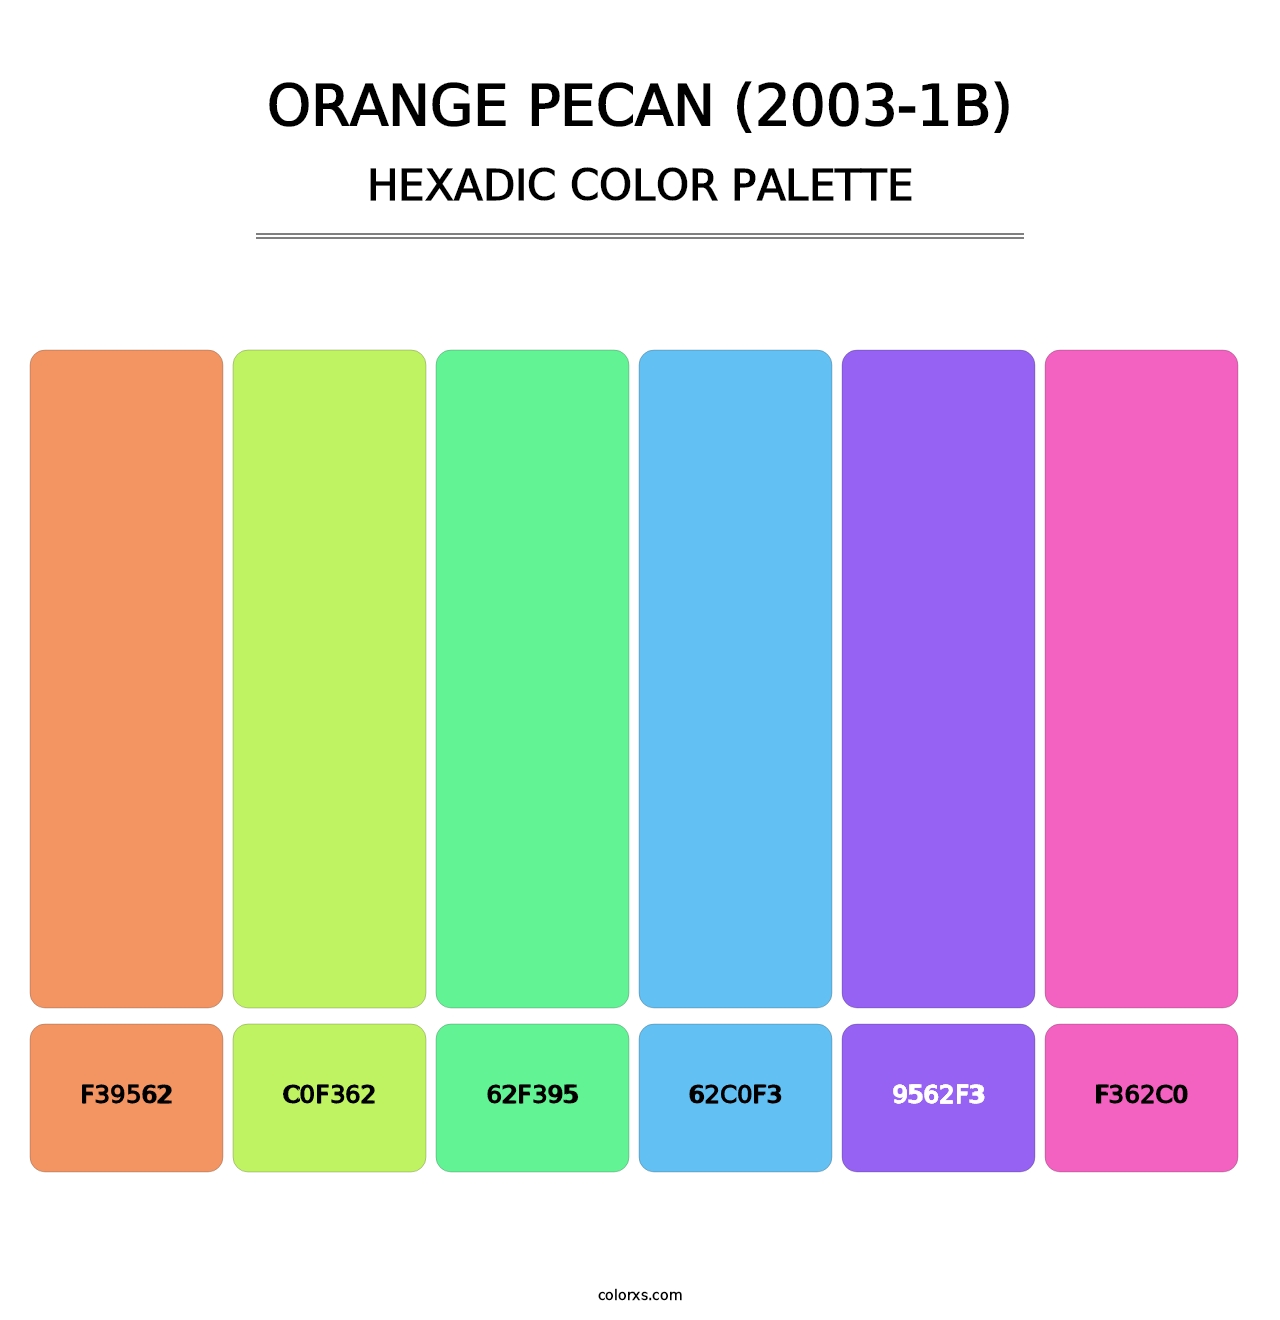 Orange Pecan (2003-1B) - Hexadic Color Palette